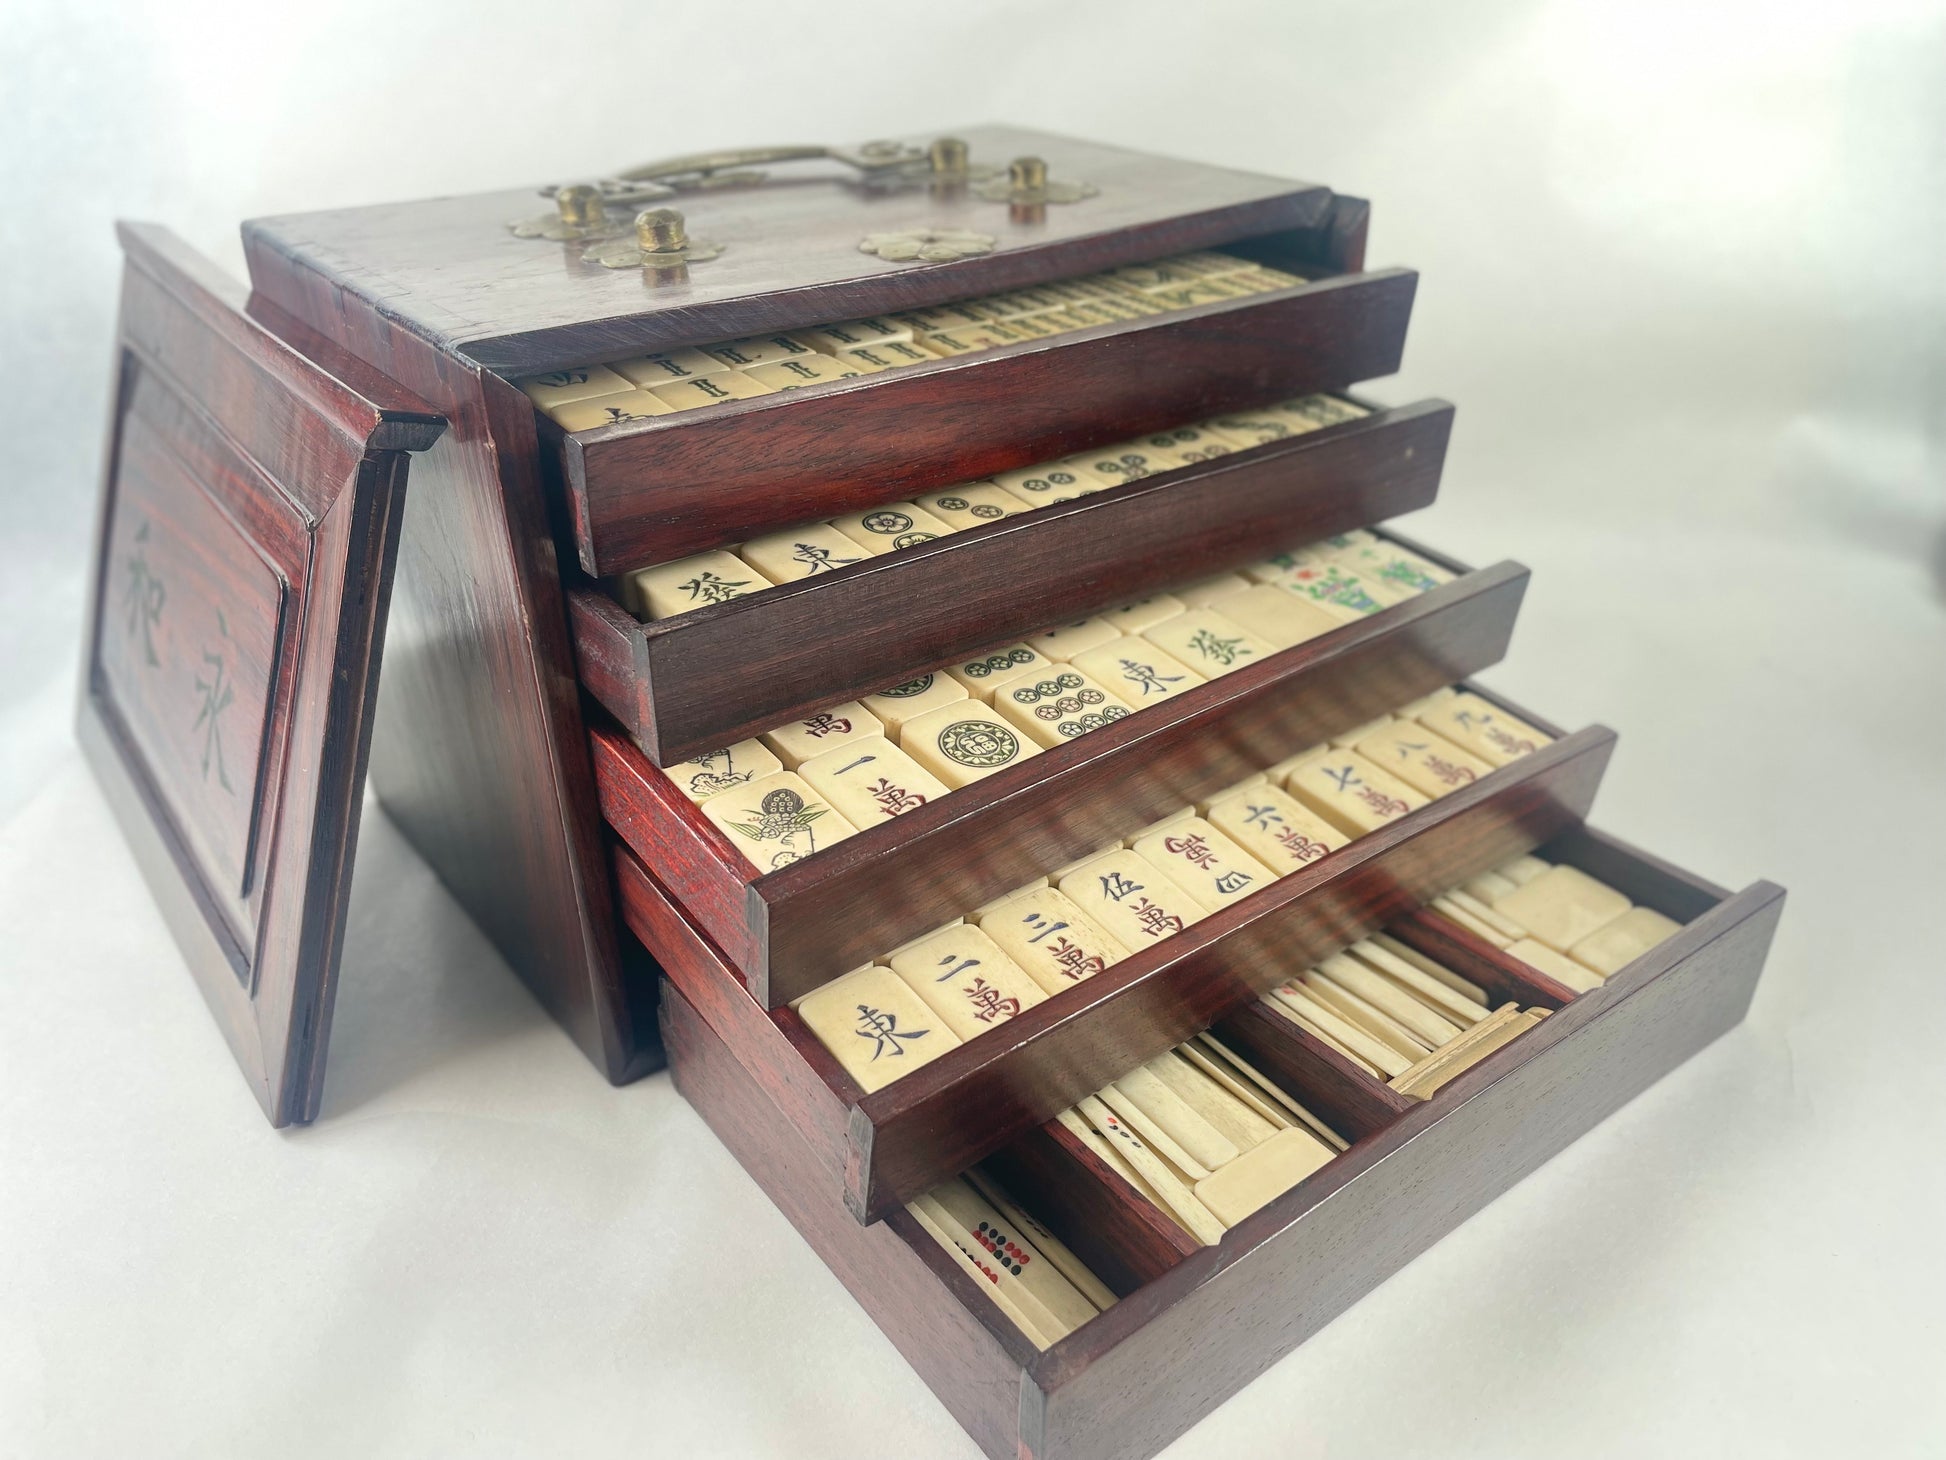 Antique Mahjong Set